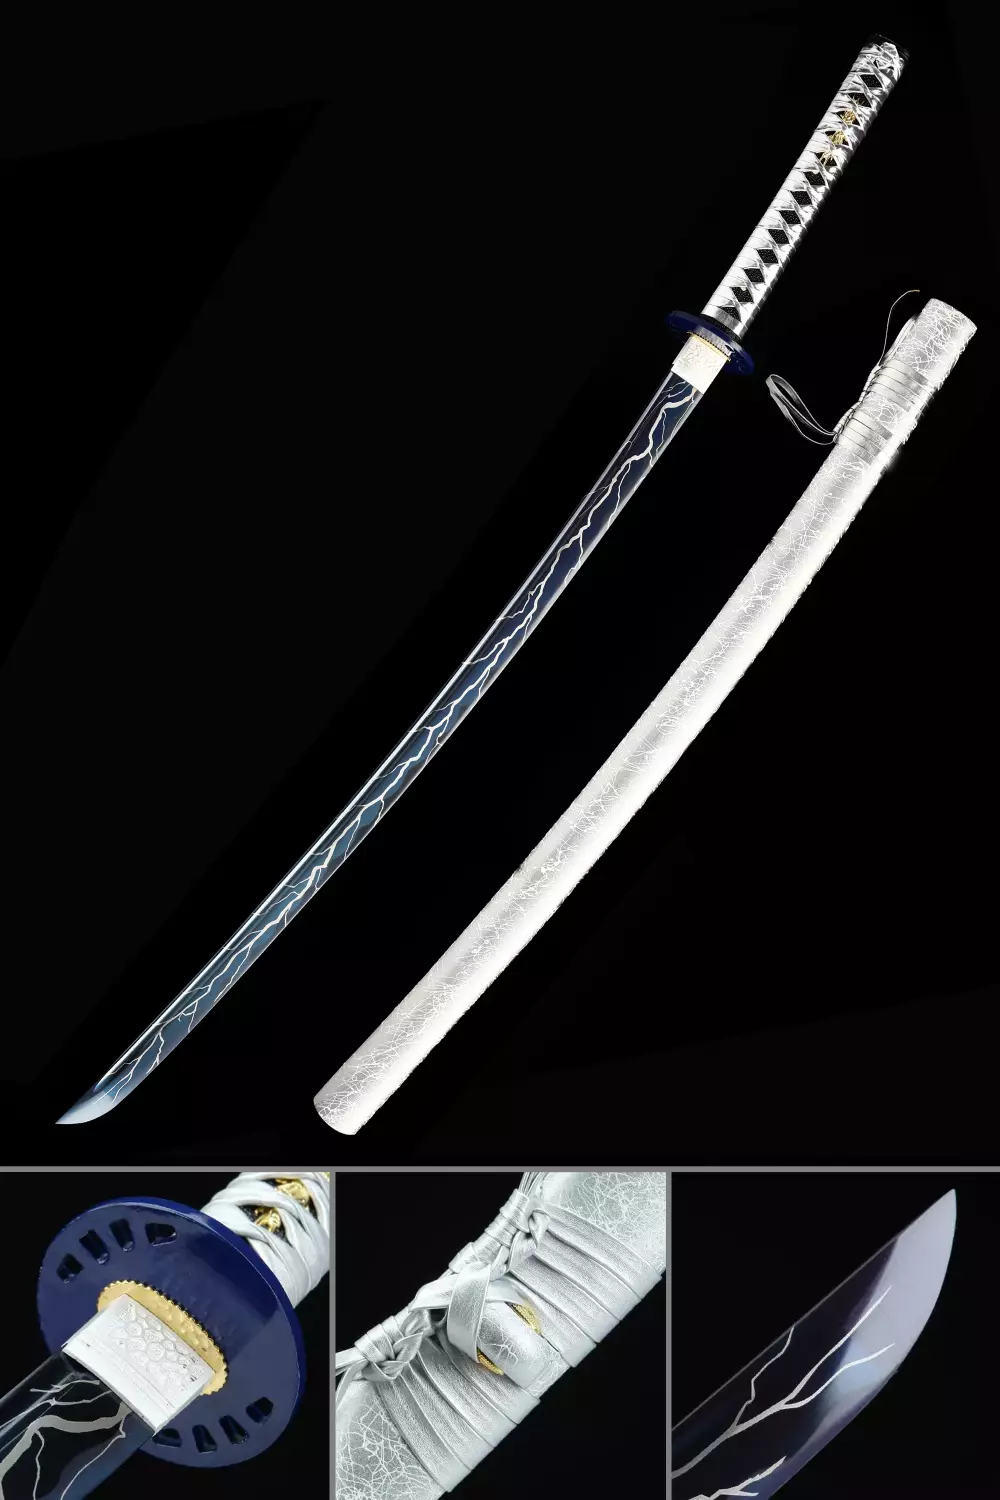 Blue Katana  Handmade Japanese Katana Sword With Blue Lightning